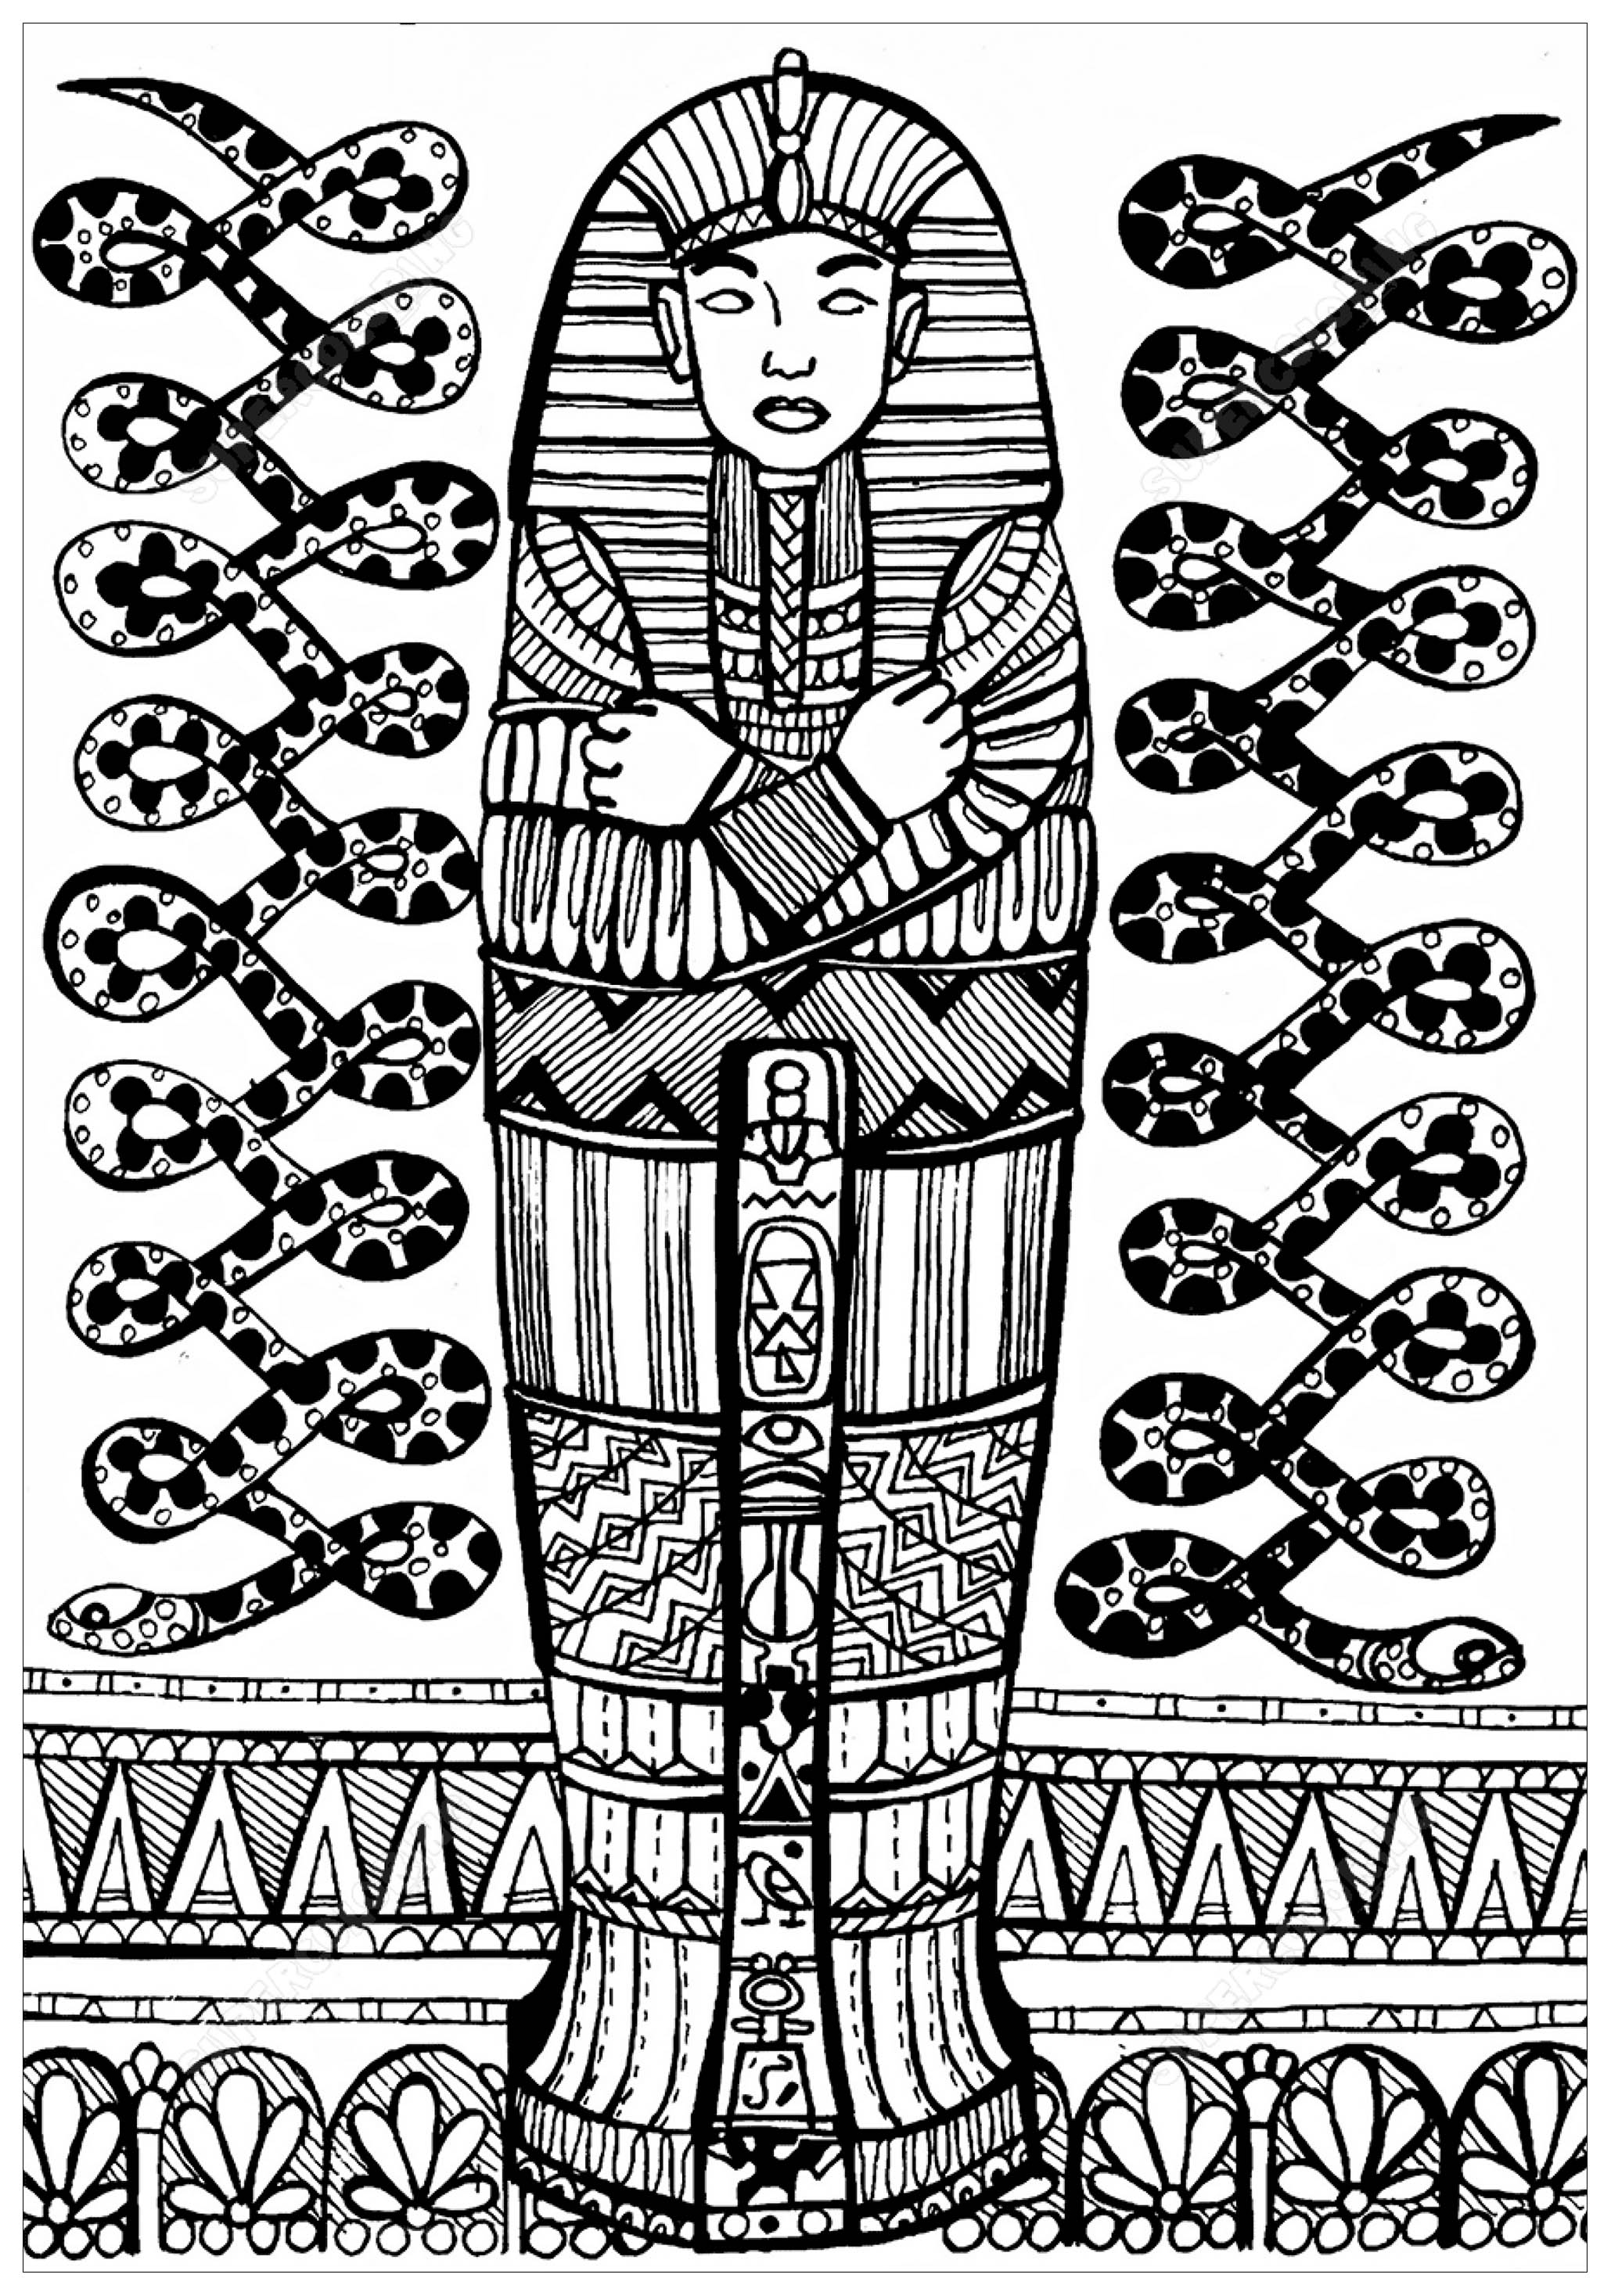 Sarcophagus of pharaoh with snakes and other patterns, Artist : Krivosheeva Olga (Ori Akuma)   Source : Supercoloring